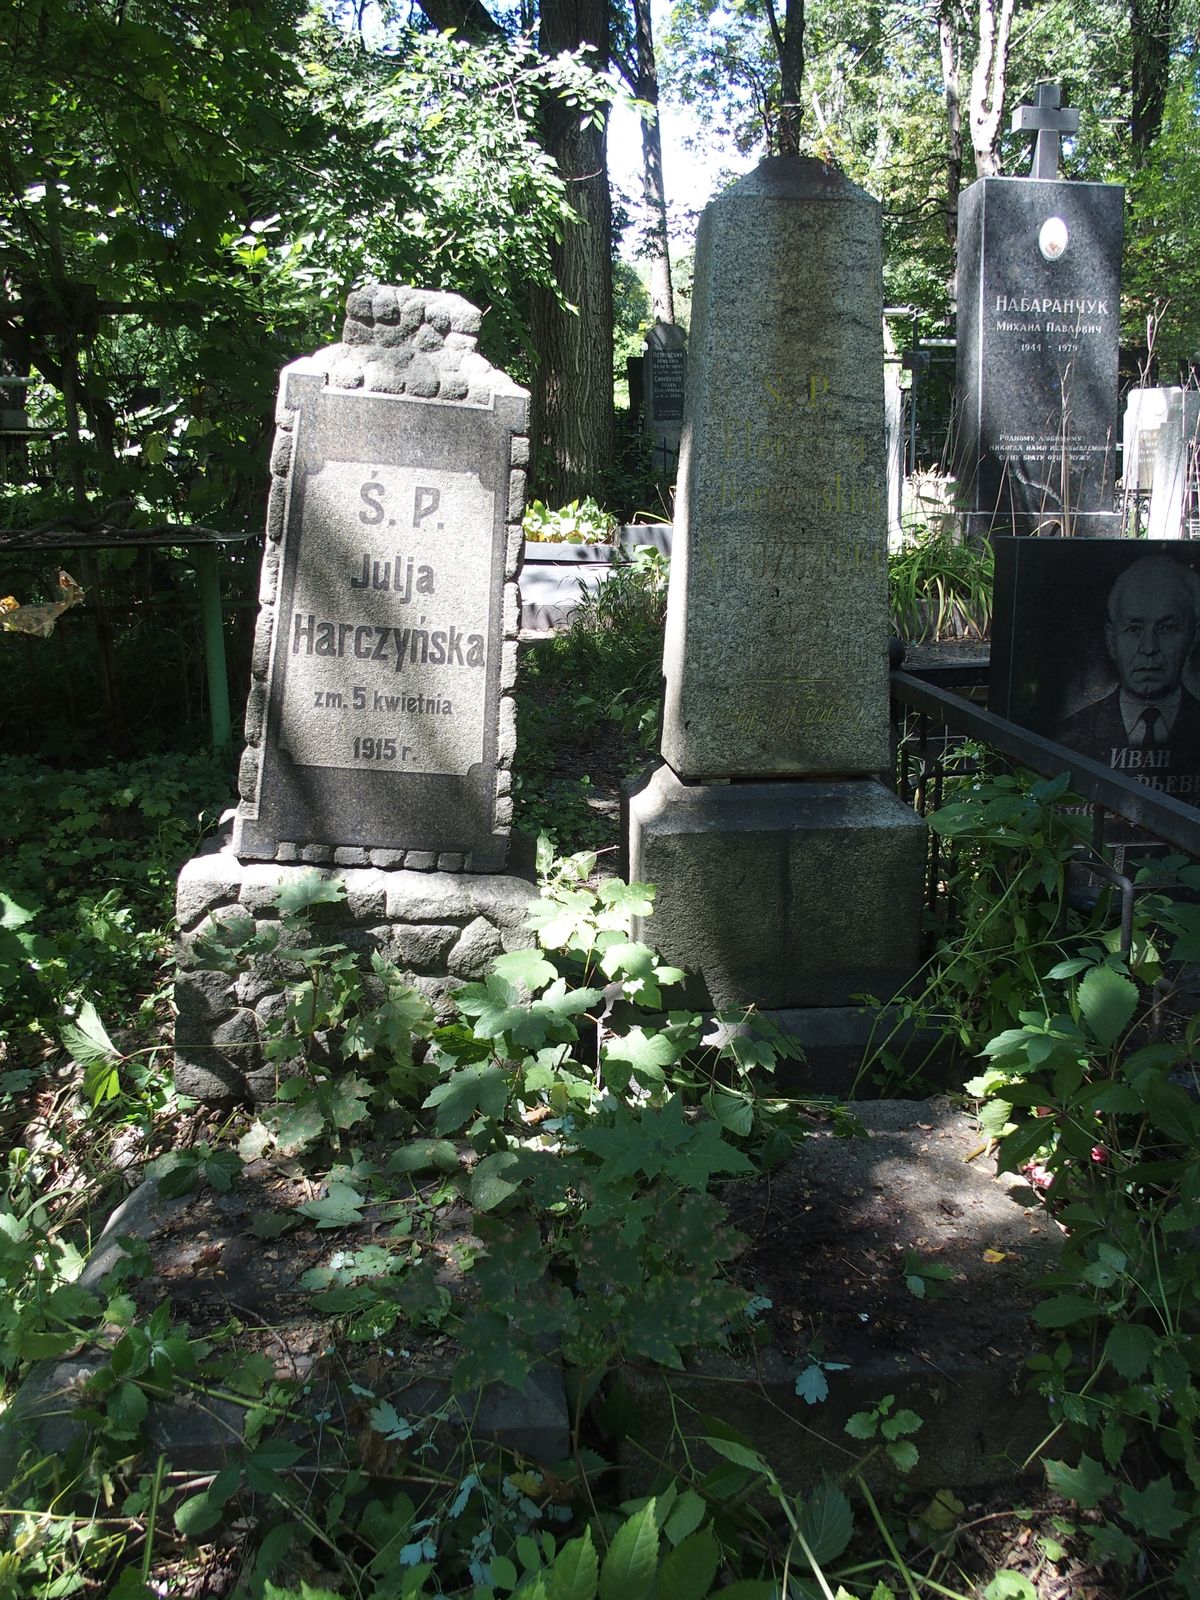 Tombstone of Yulia Harchinskaya, Baykova cemetery, Kyiv, as of 2021